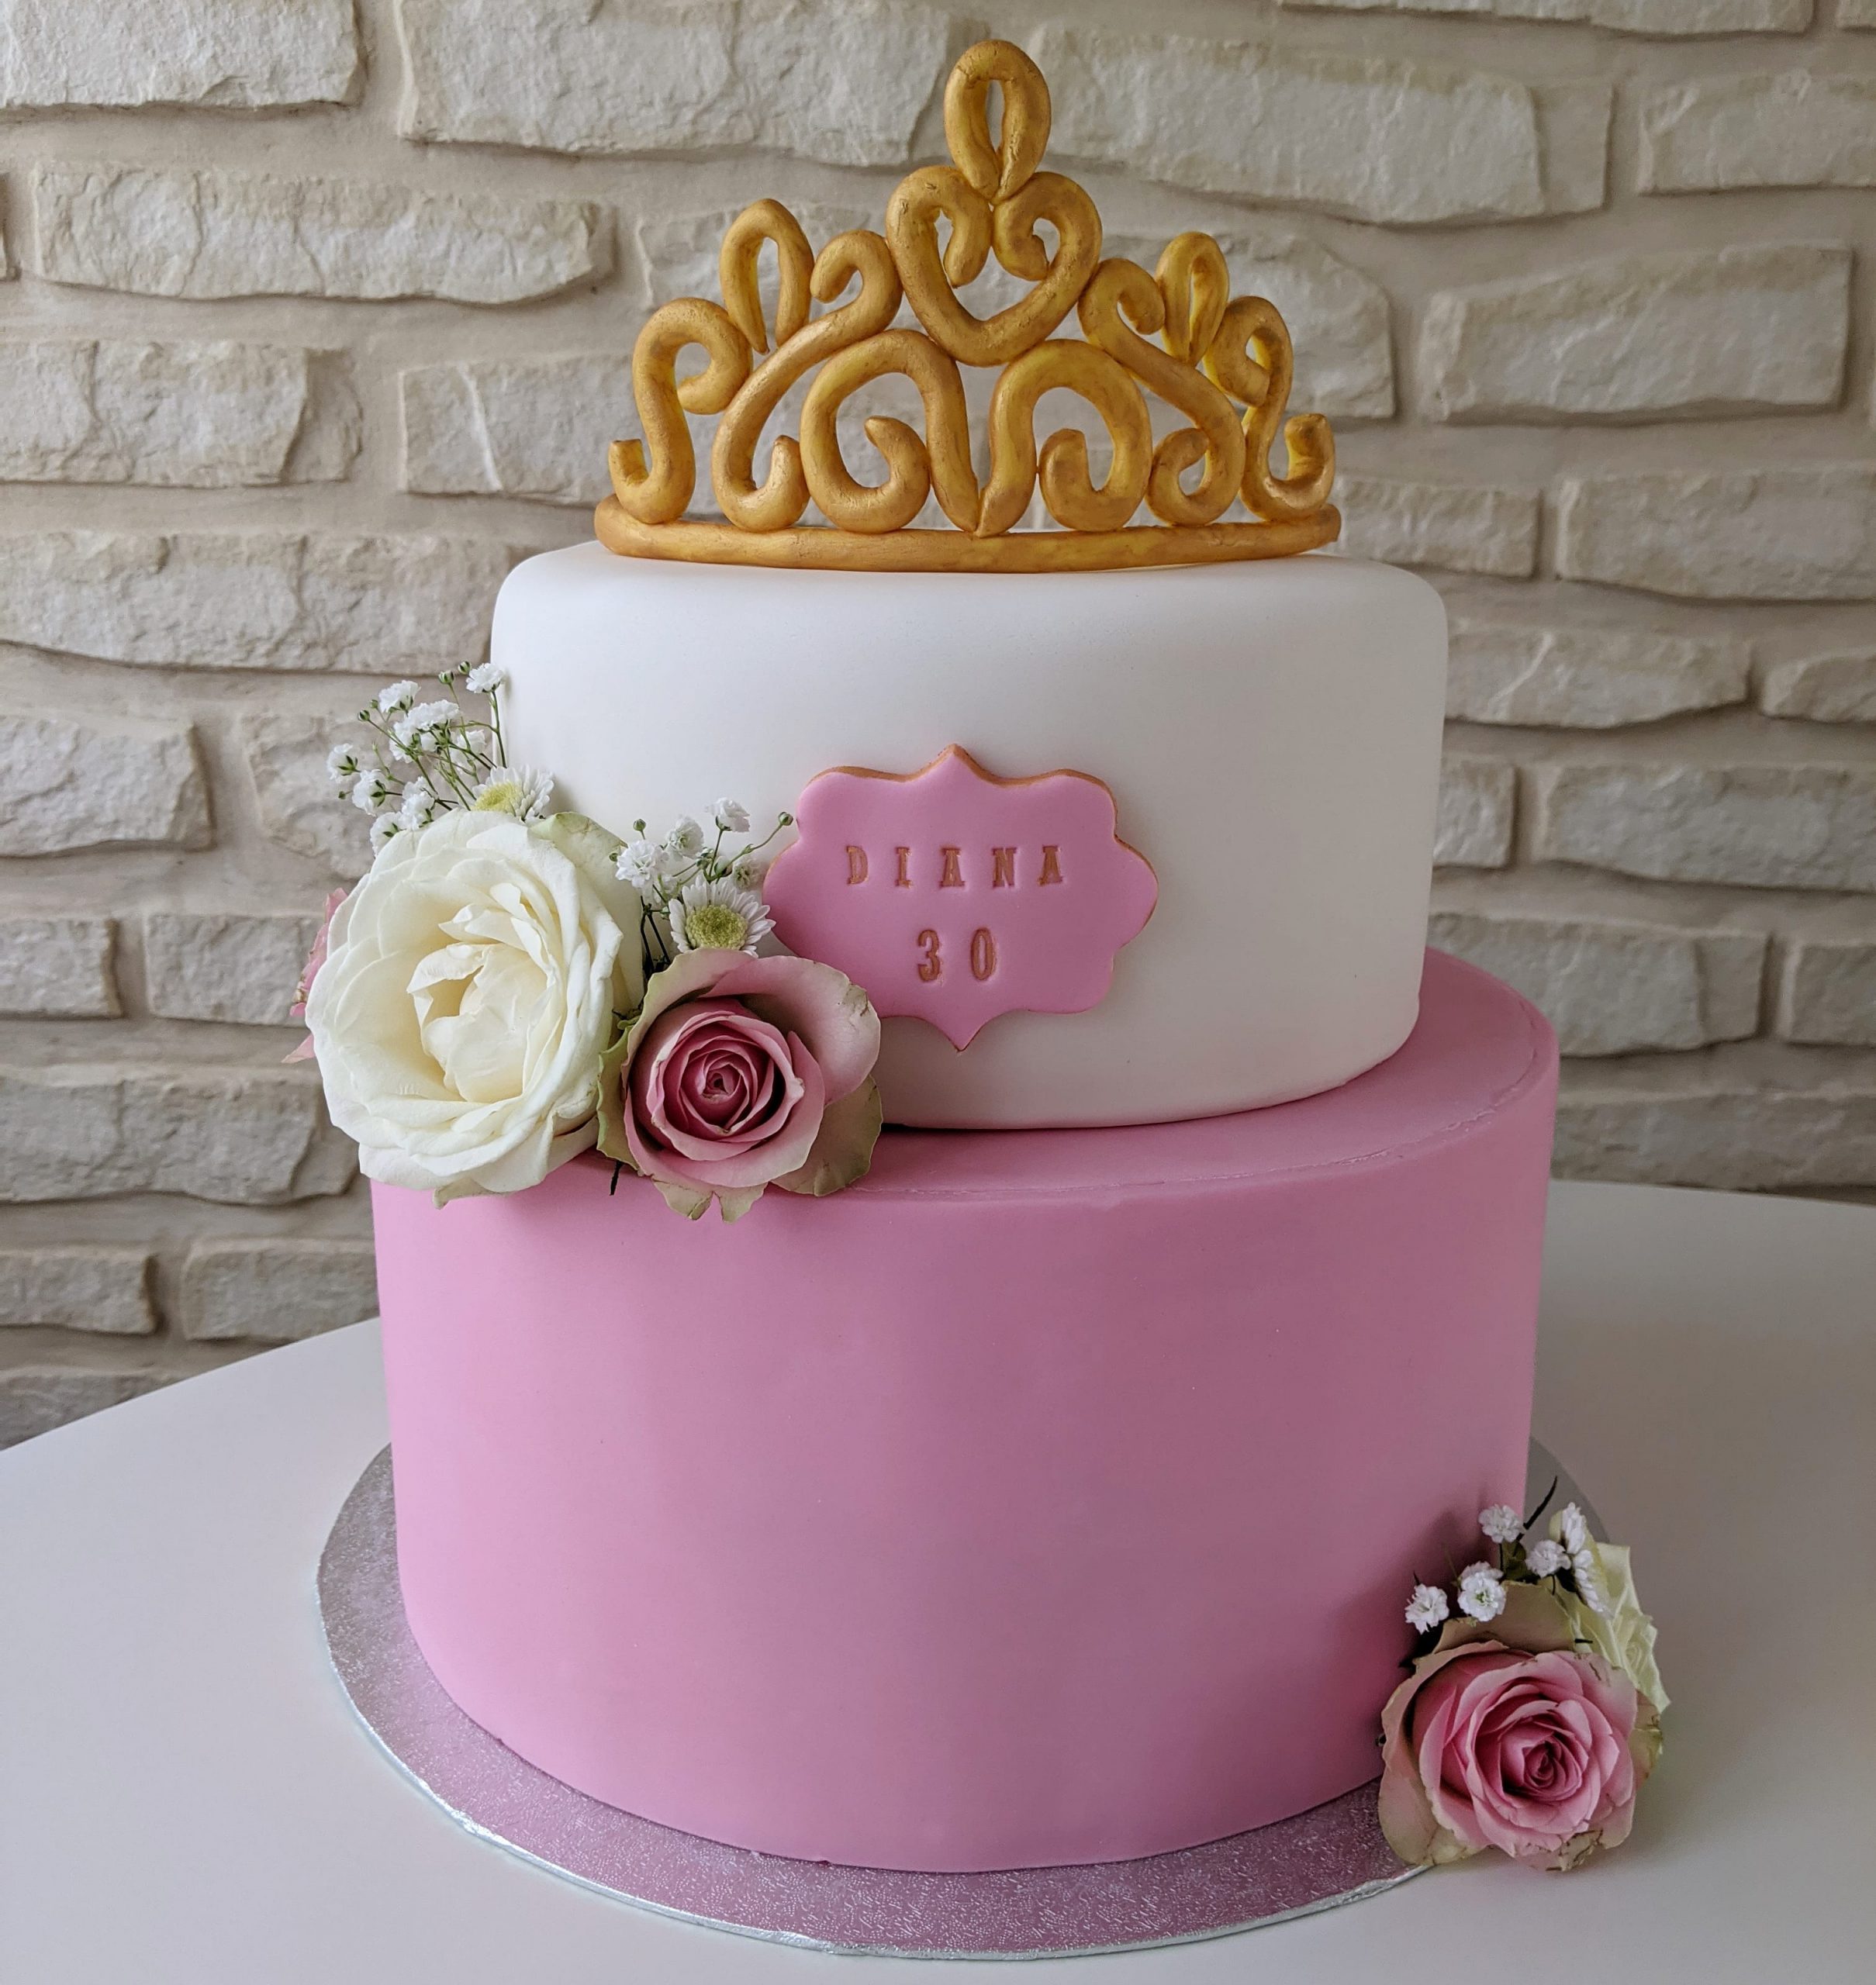 Wedding cake- Pâte à sucre – Citron Pressé